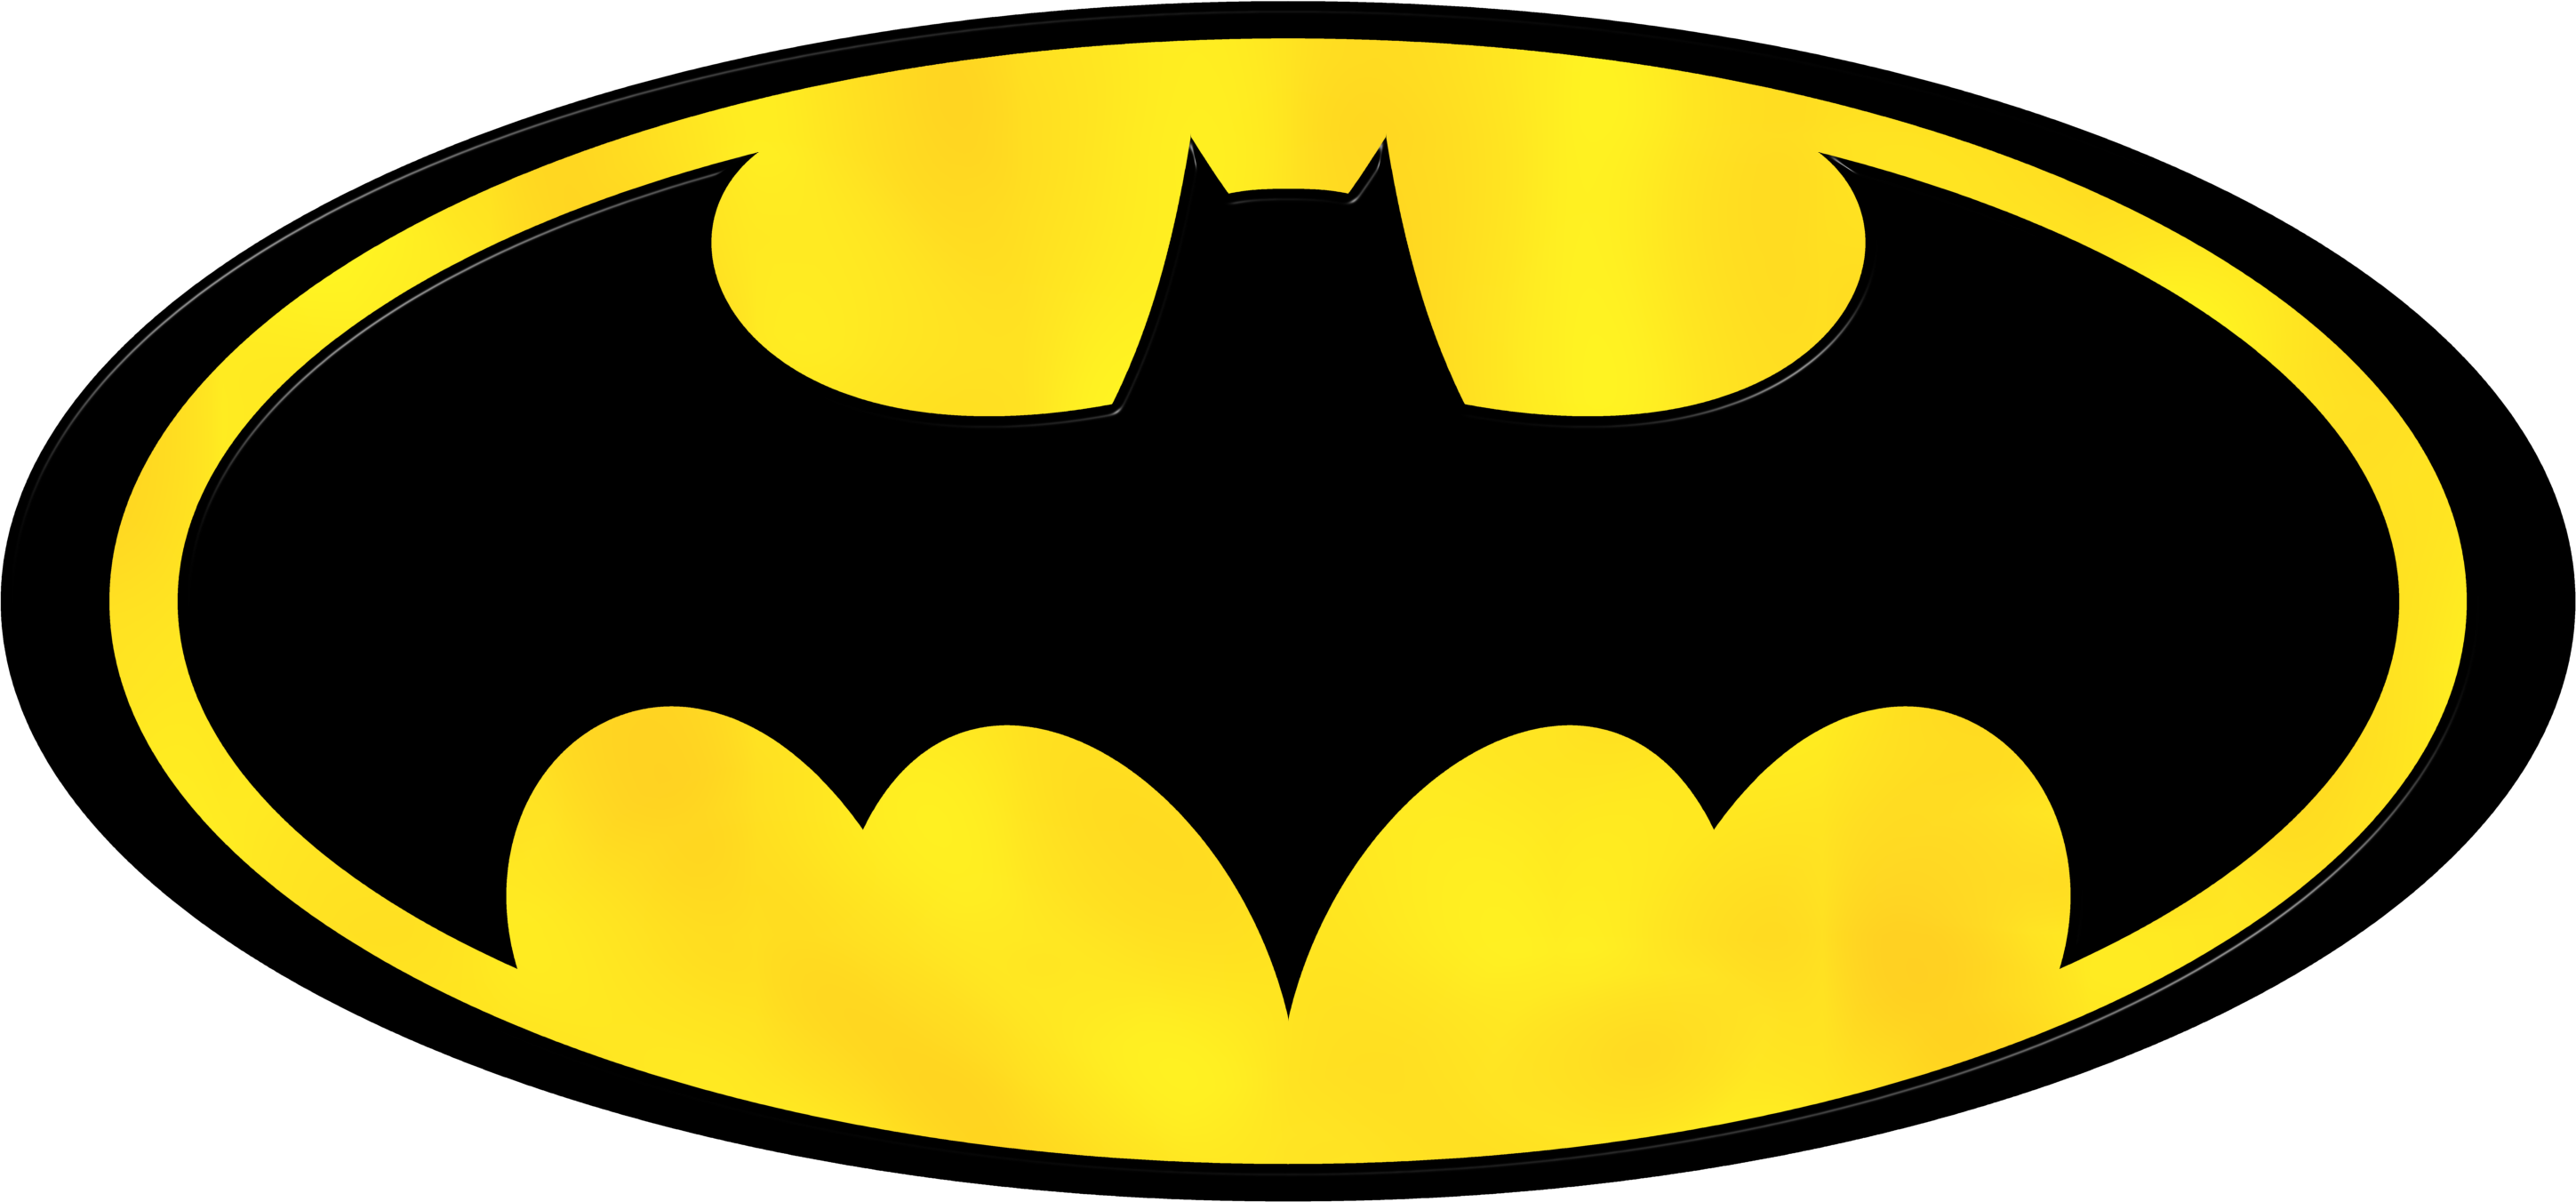 Group of: Make Unique Batman logo pic3 Design Ideas Hicustom.net 